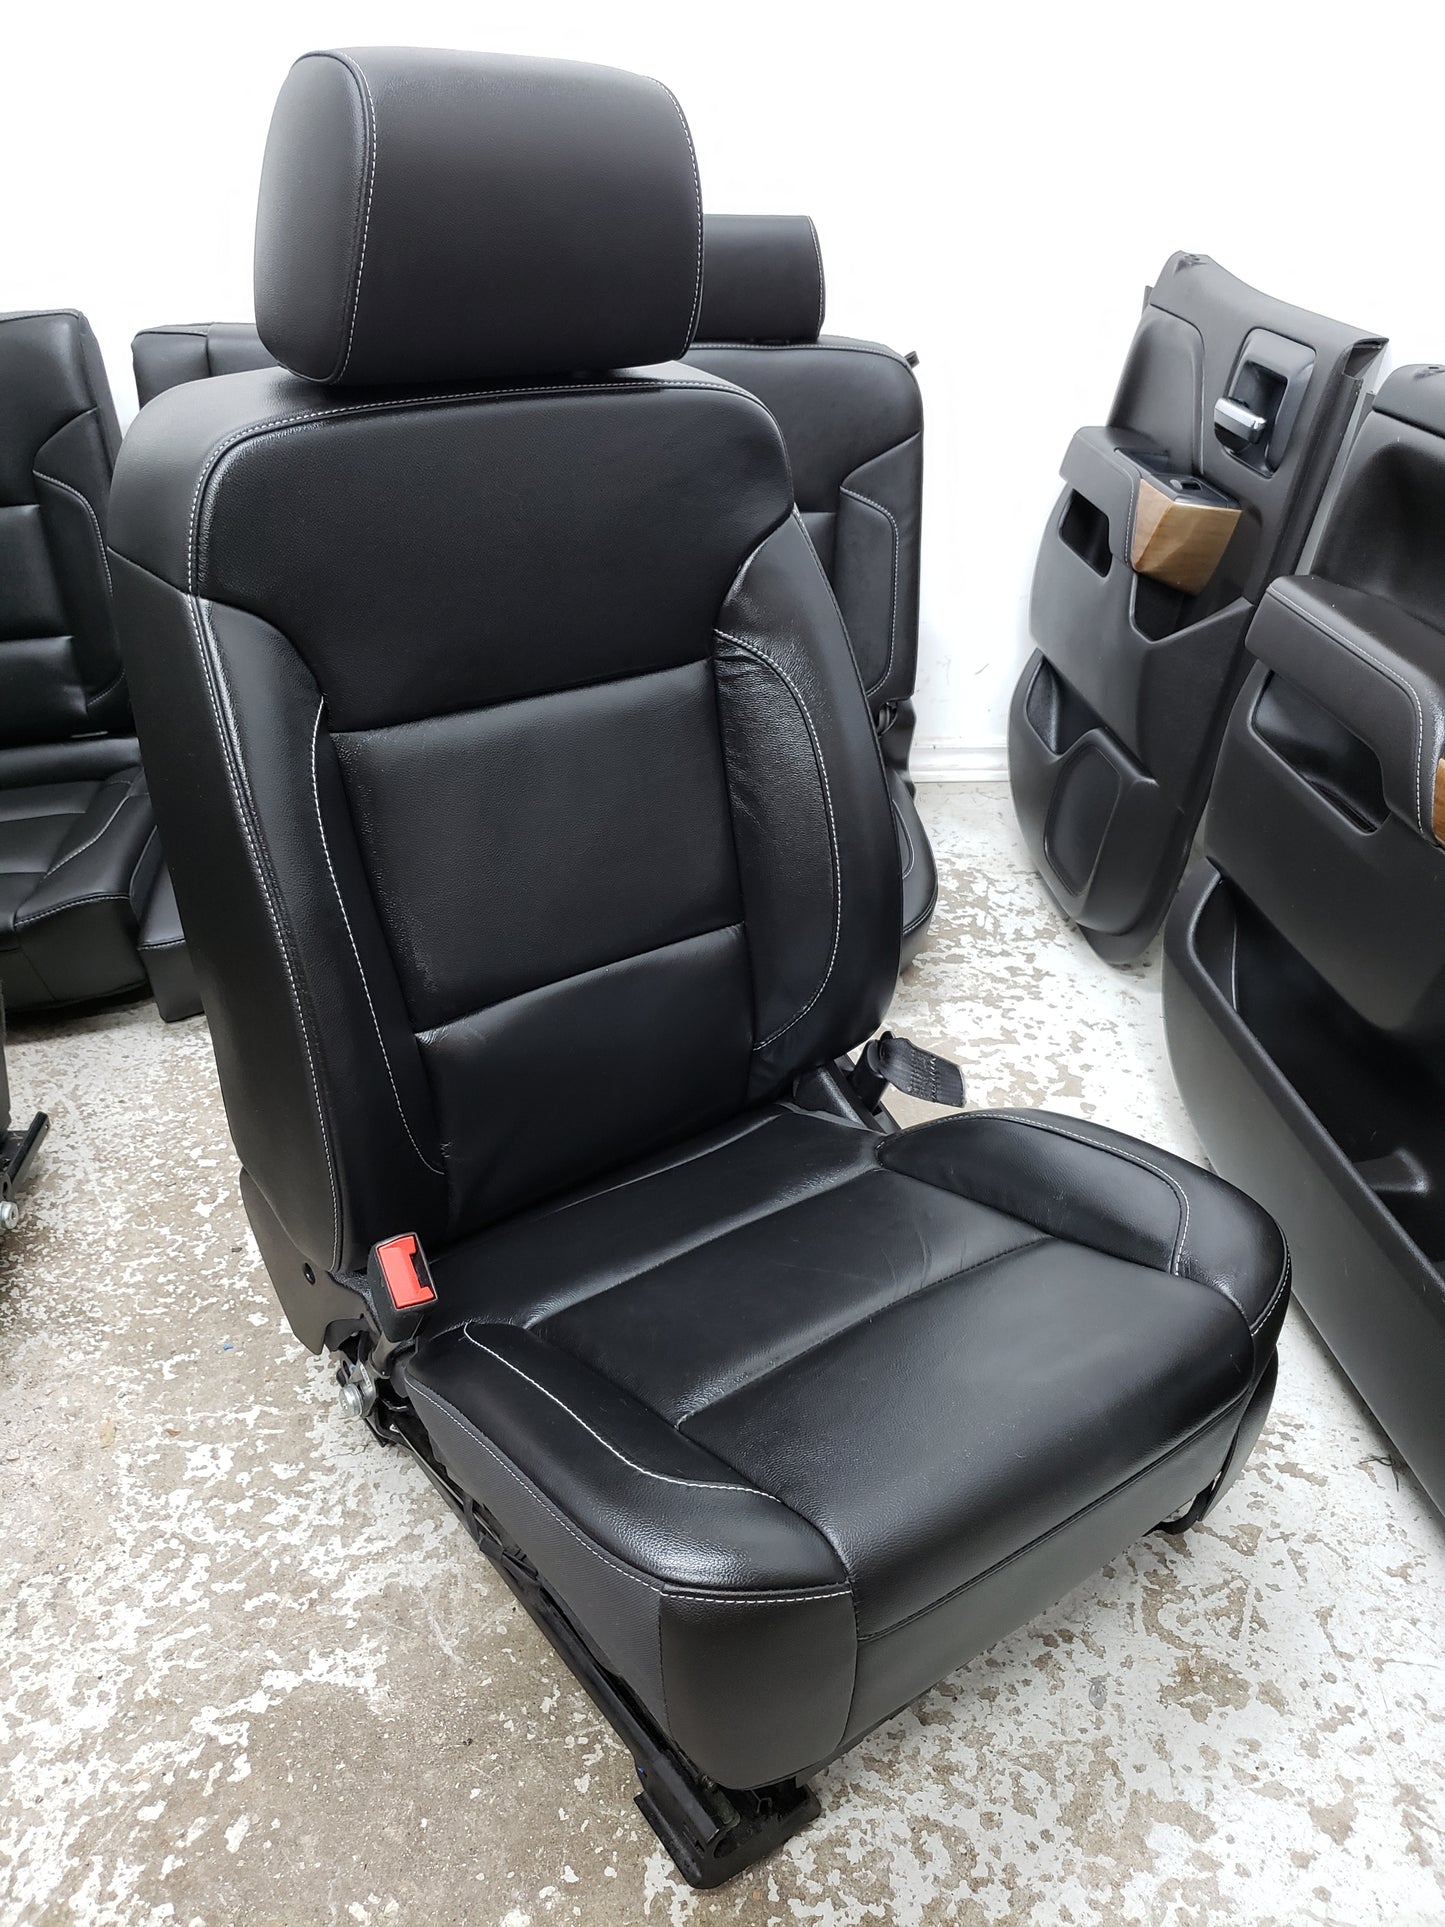 Chev Silverado 2017 Double Cab BLACK LEATHER Seats Interior LTZ GMC Sierra